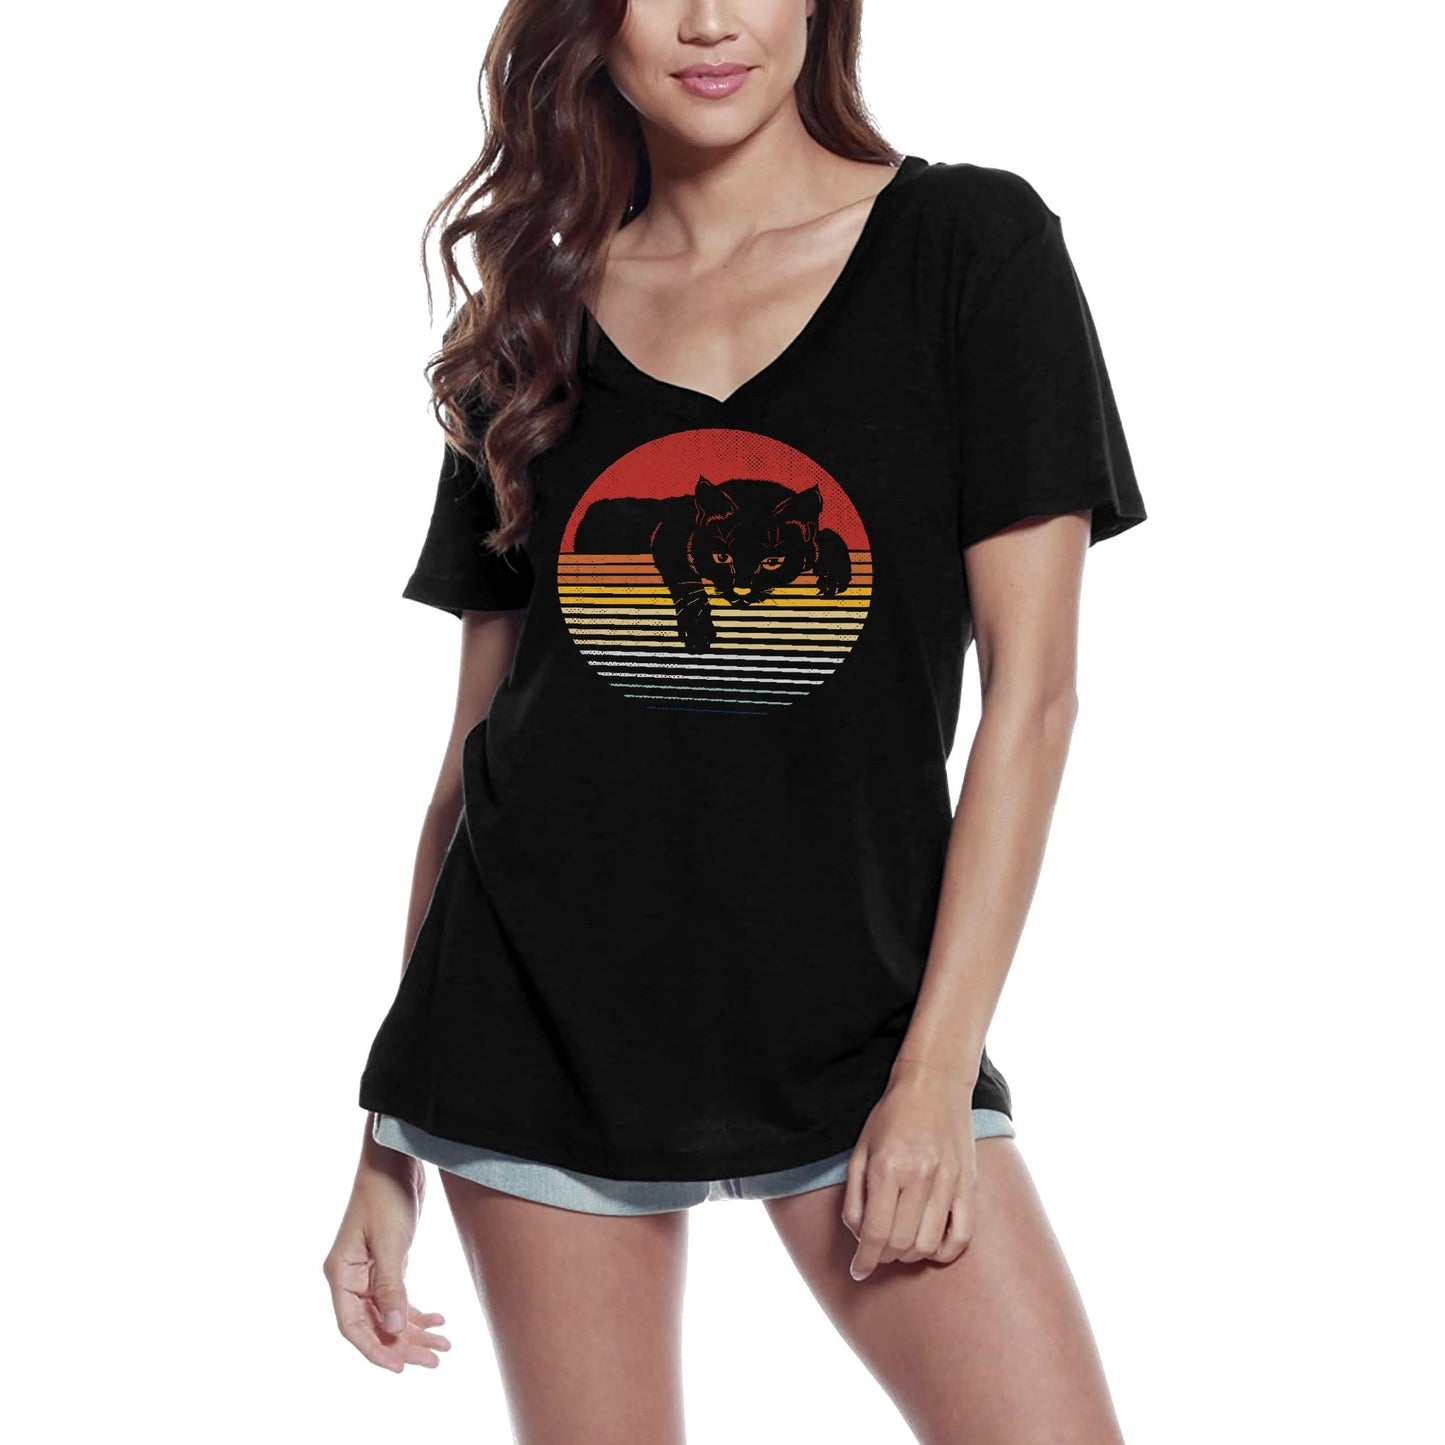 ULTRABASIC Women's T-Shirt Retro Sunset Black Cute Cat - Funny Cat Tee Shirt